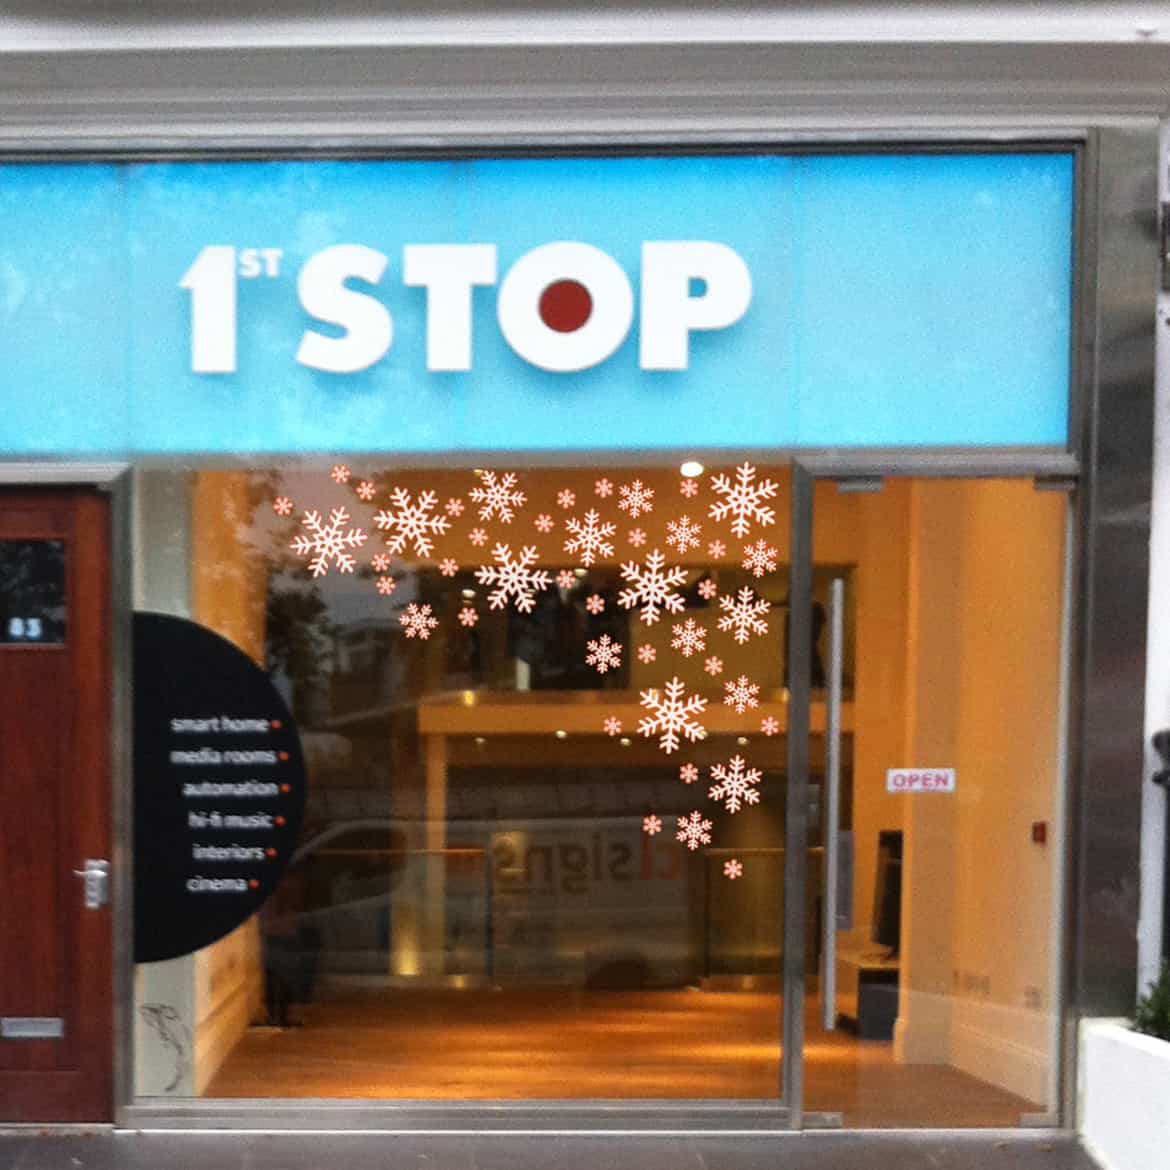 1st Stop - Front Shop Sign